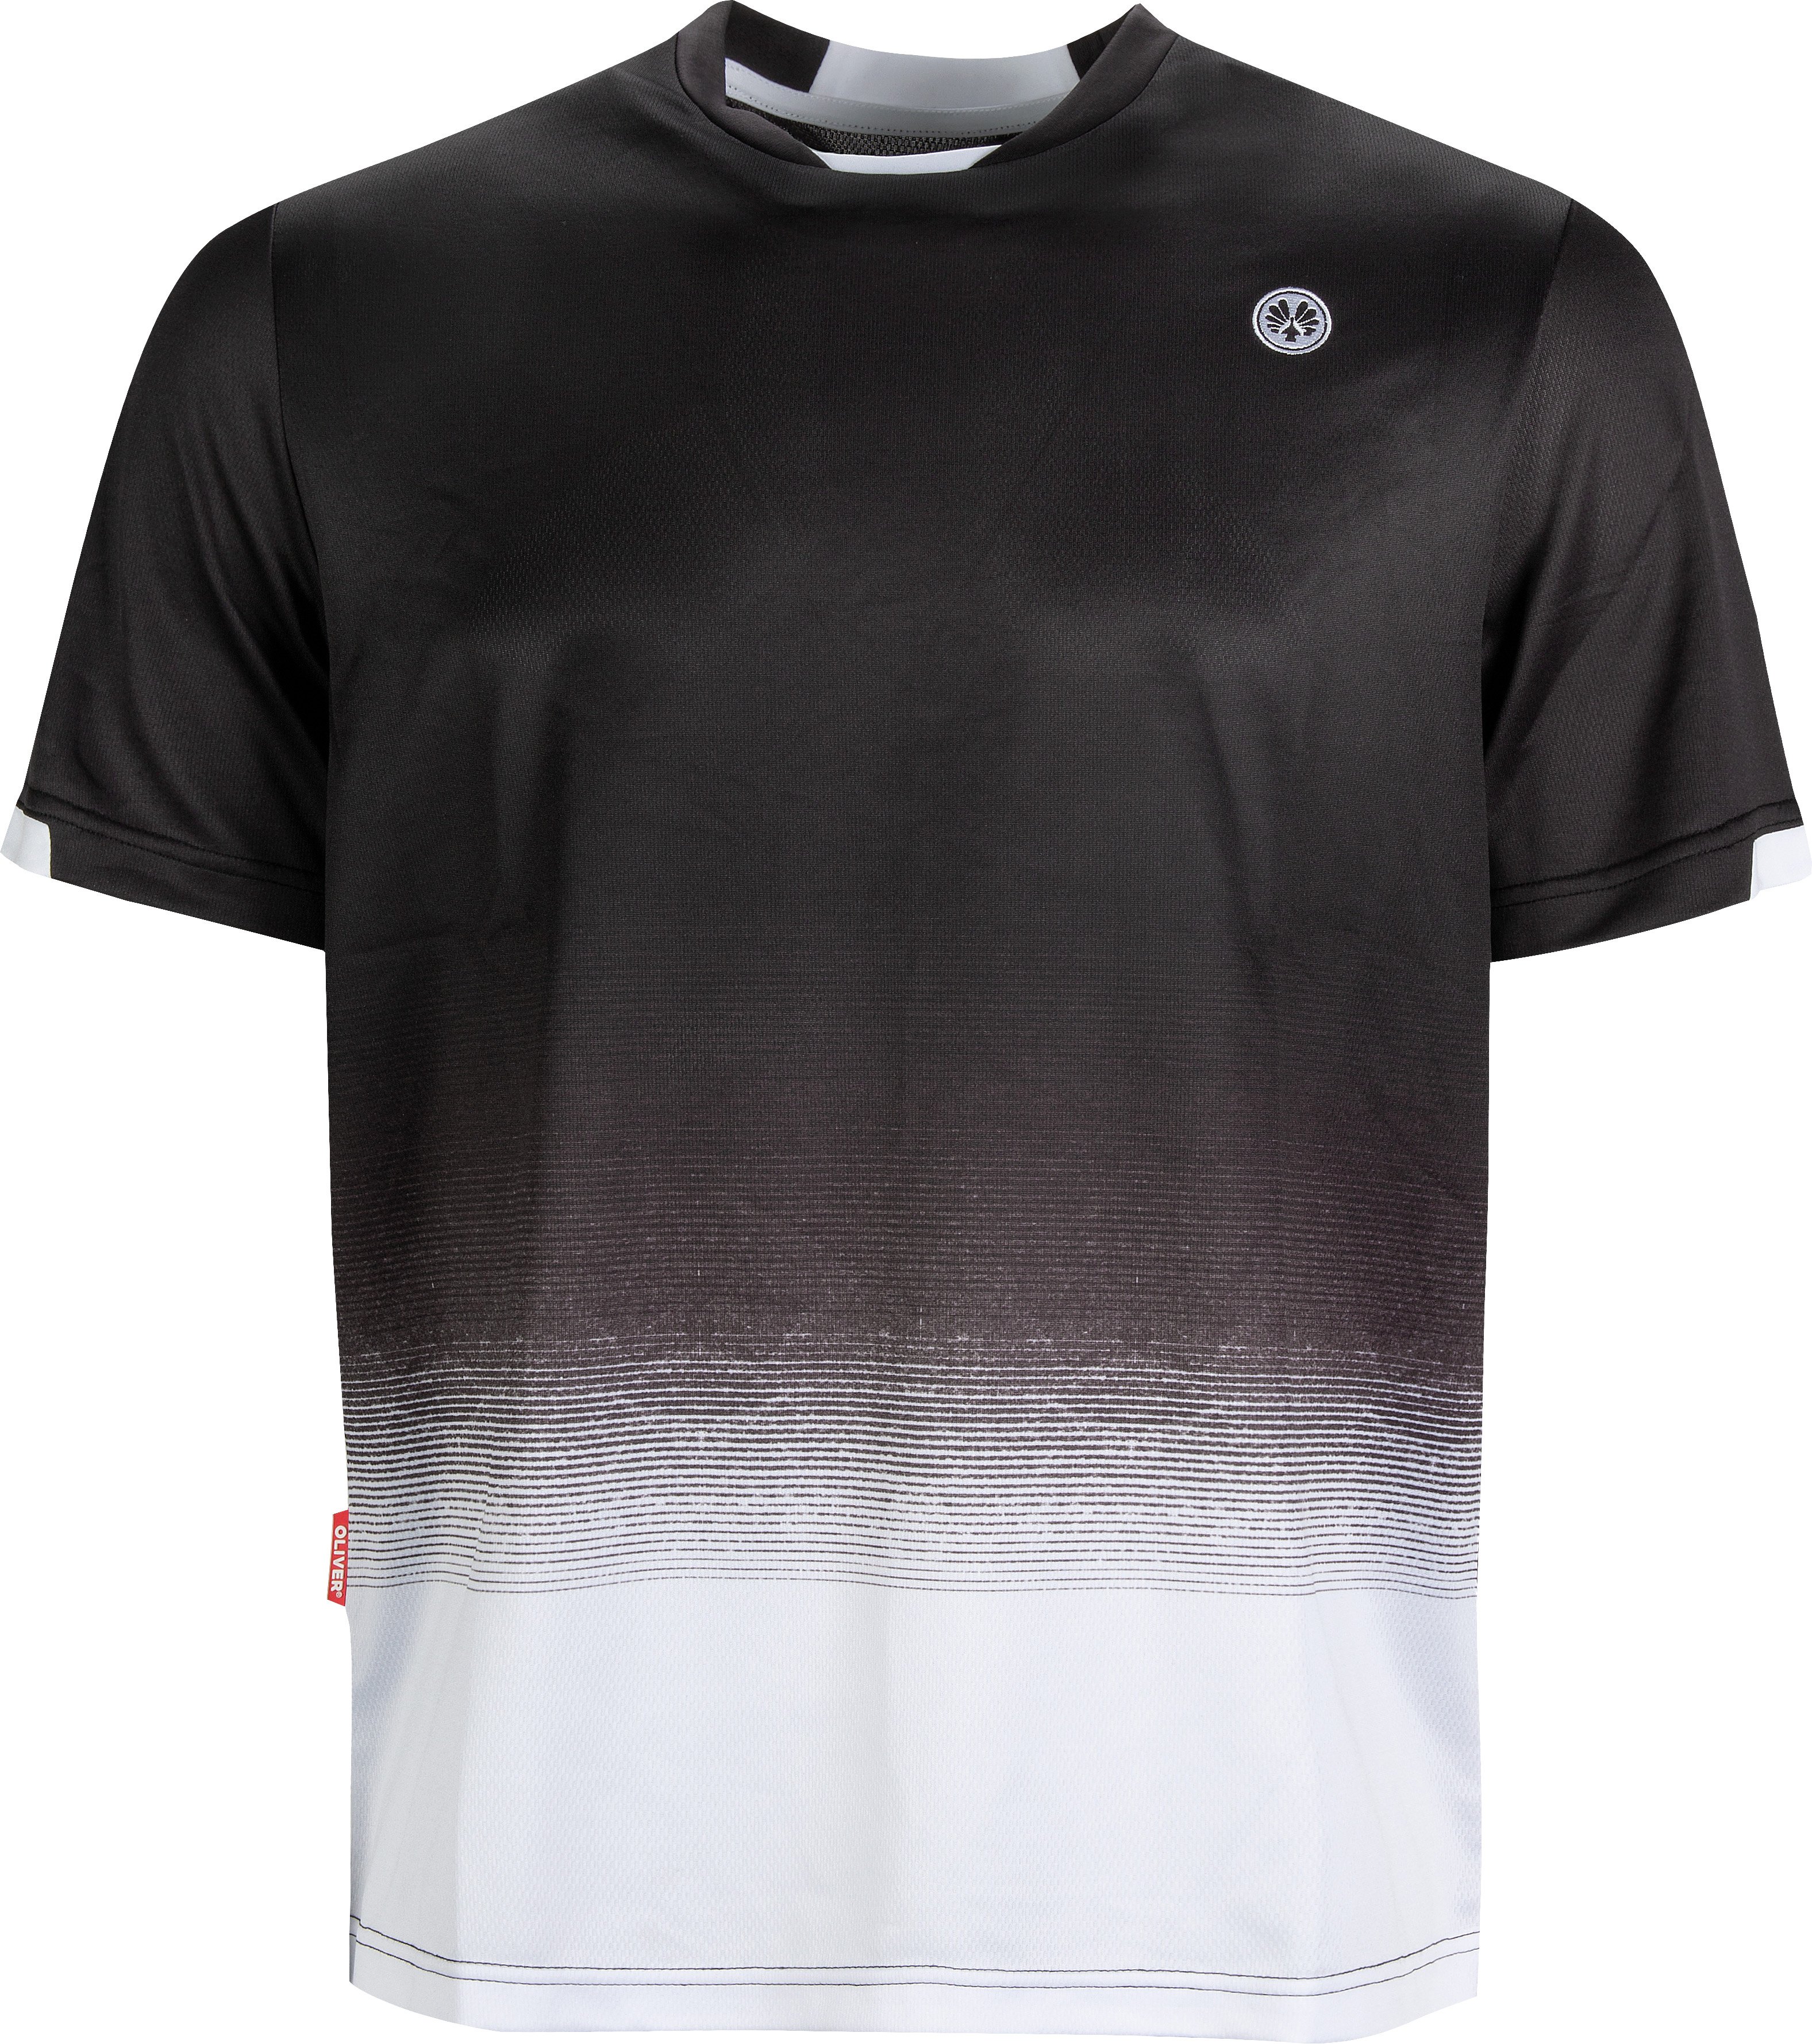 Oliver Arona T-Shirt S